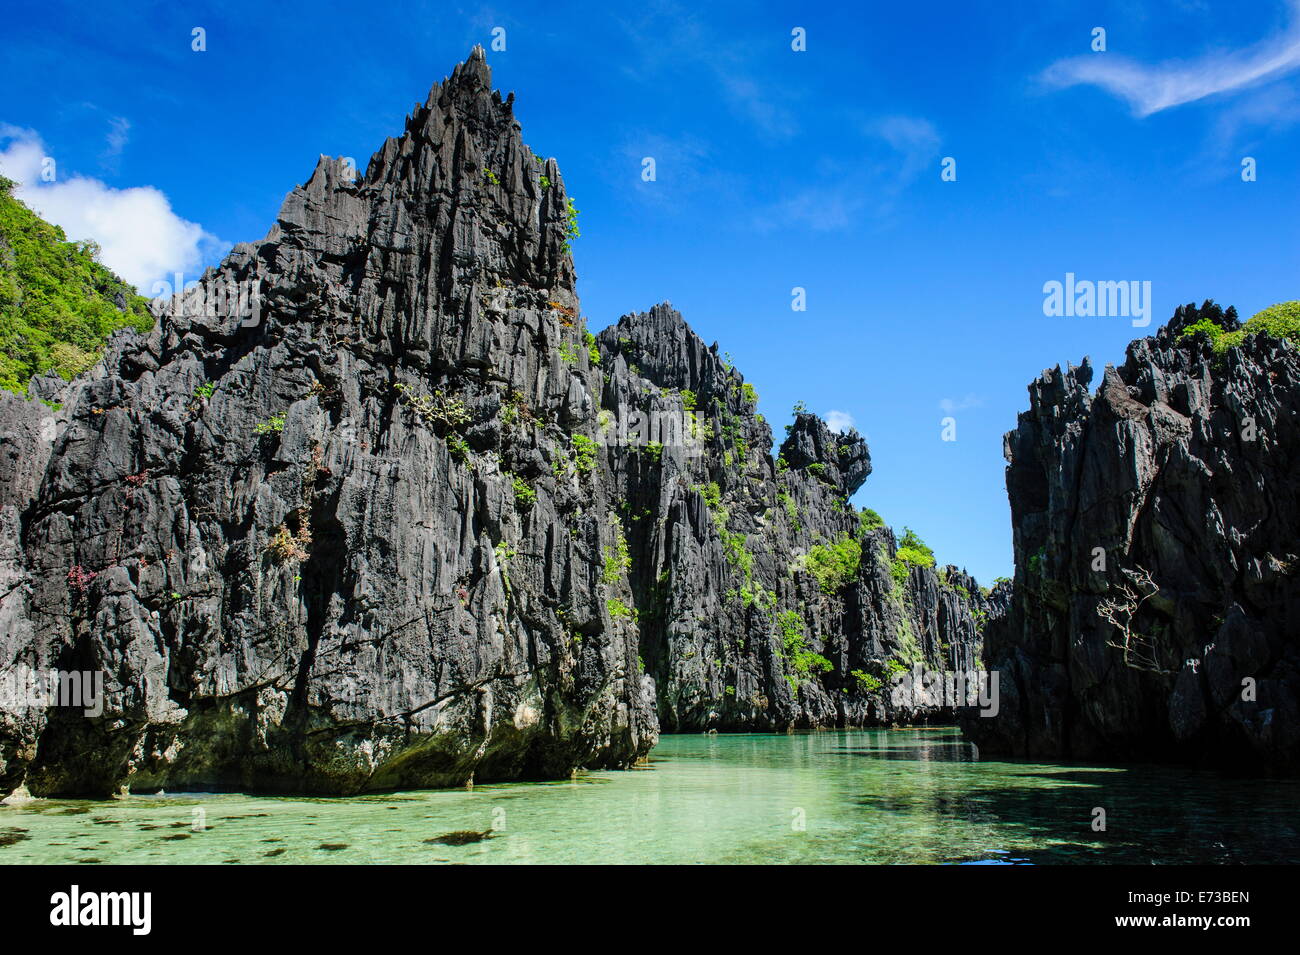 Kristallklares Wasser im Bacuit Archipel, Palawan, Philippinen, Südostasien, Asien Stockfoto